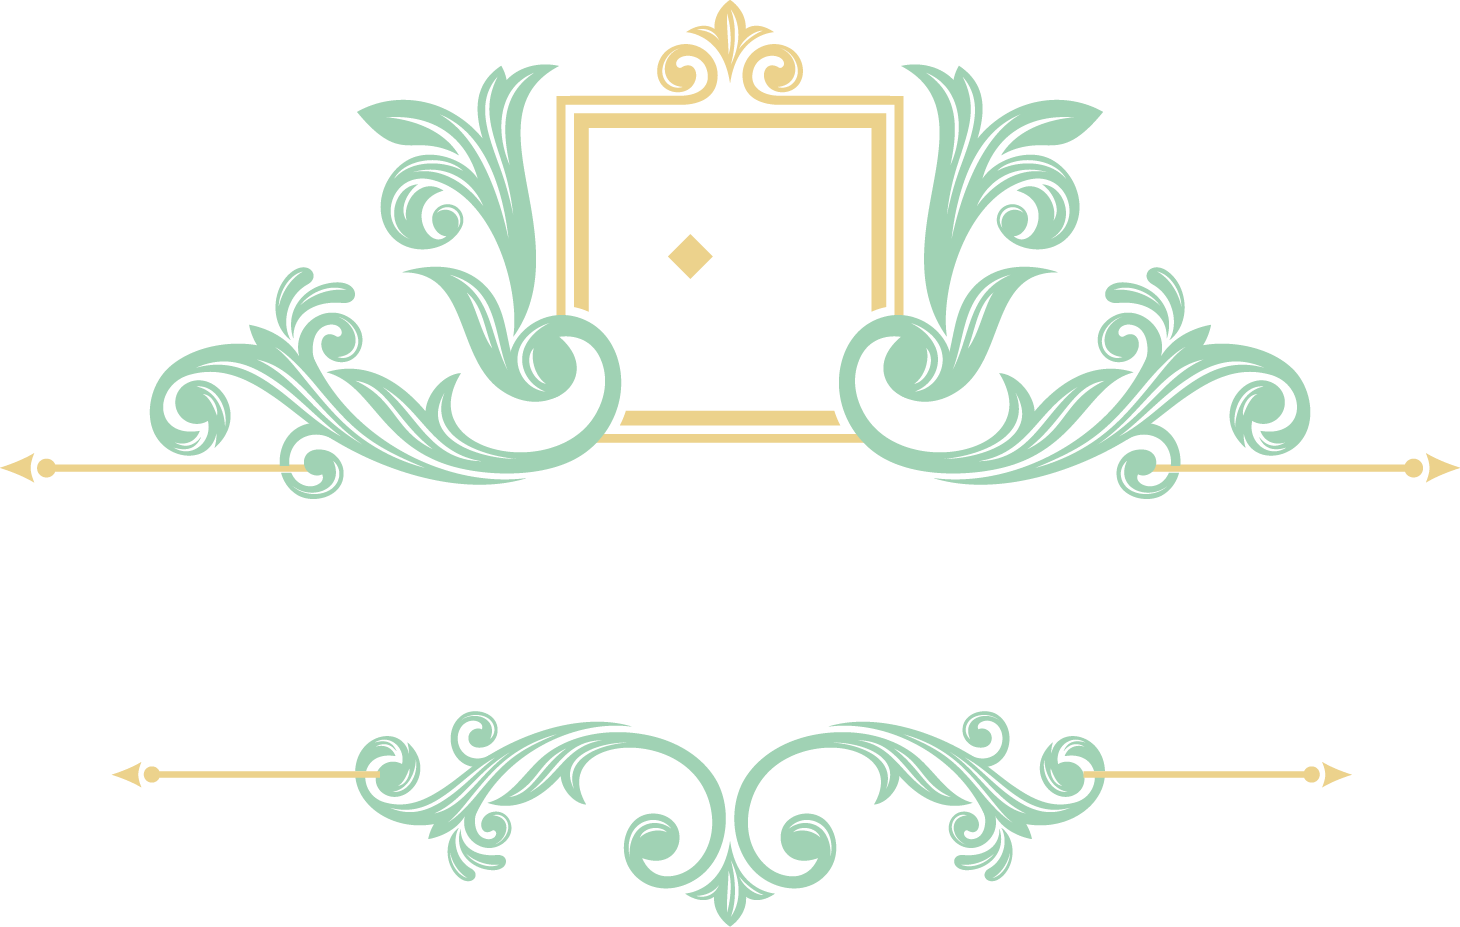 League of Hustlers